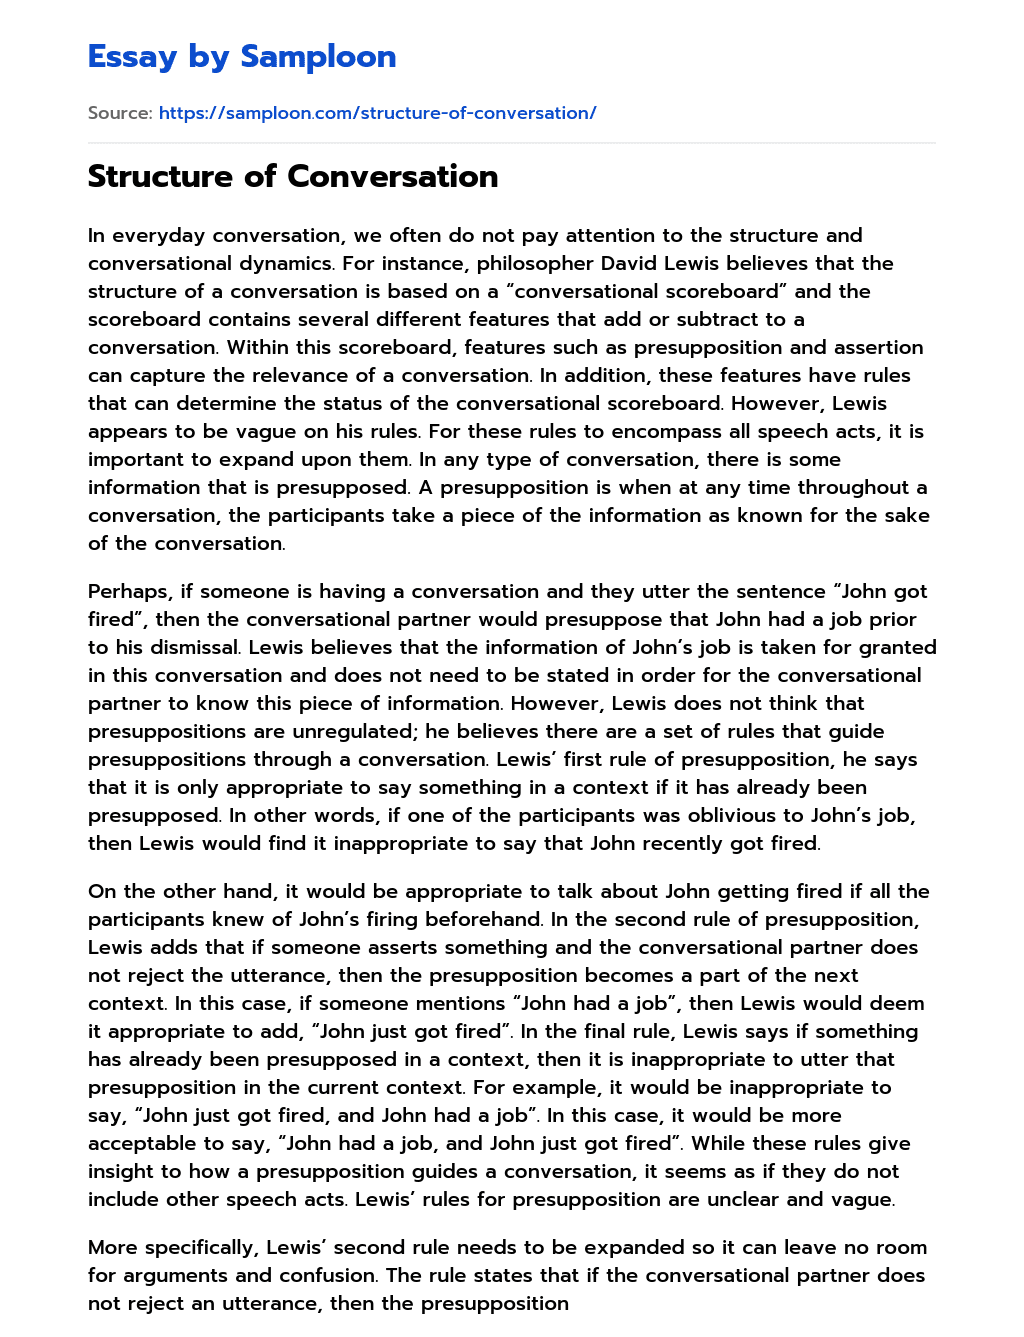 Structure of Conversation essay